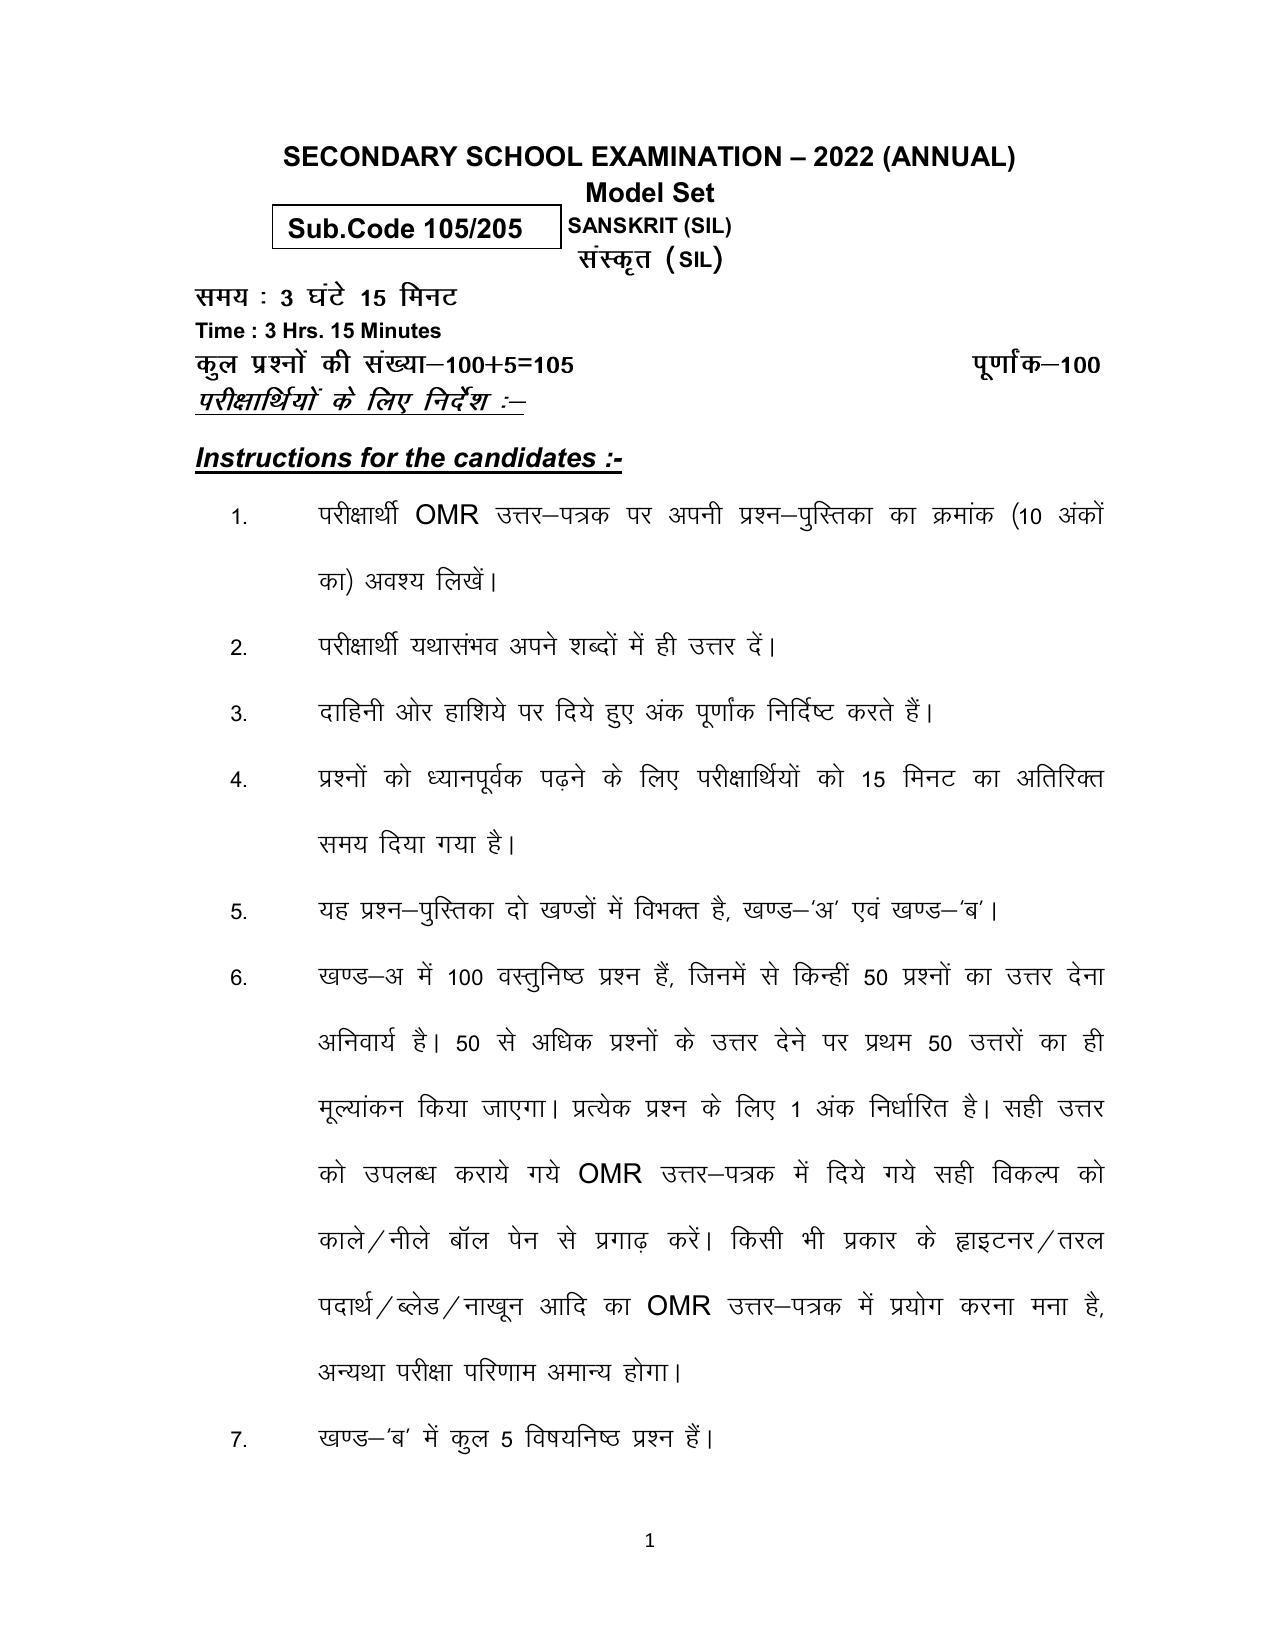 Bihar Board 10th Model Paper 2022 -Sanskrit (SIL) - Page 1